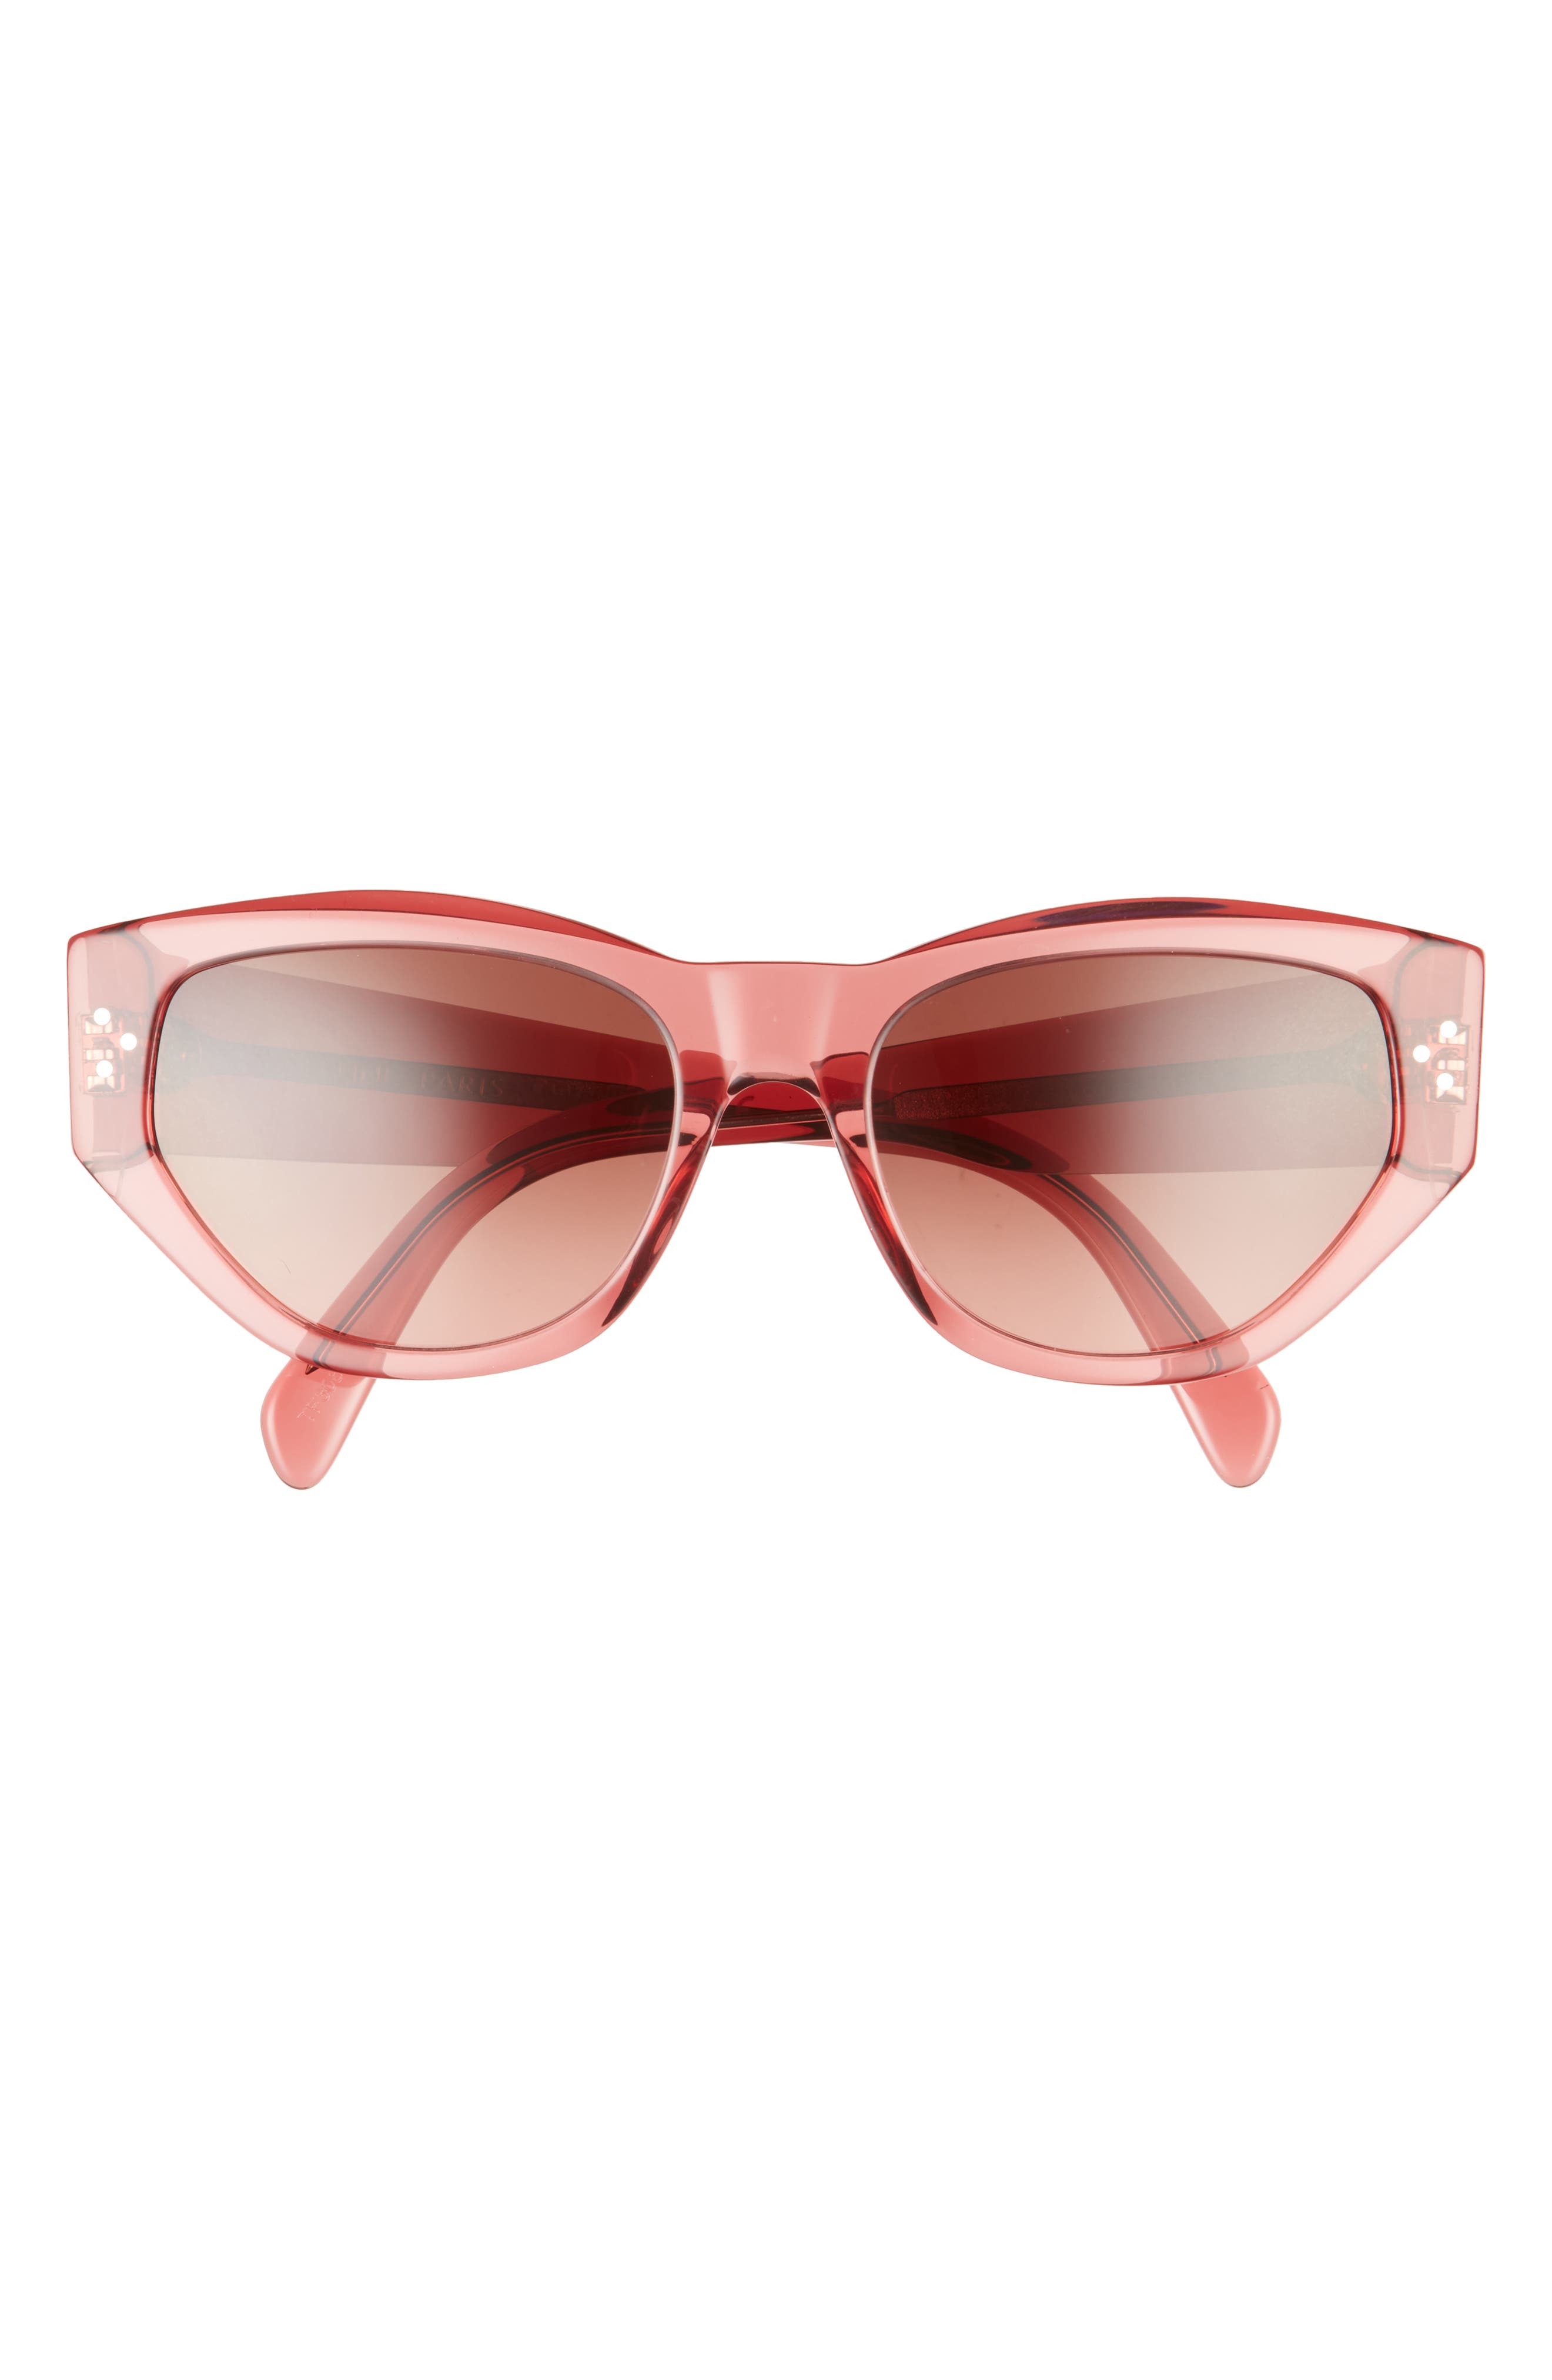 Oversized BIG Large AUDREY Eye Round D Frame Fashion 3 Dots Top Sunglasses L 